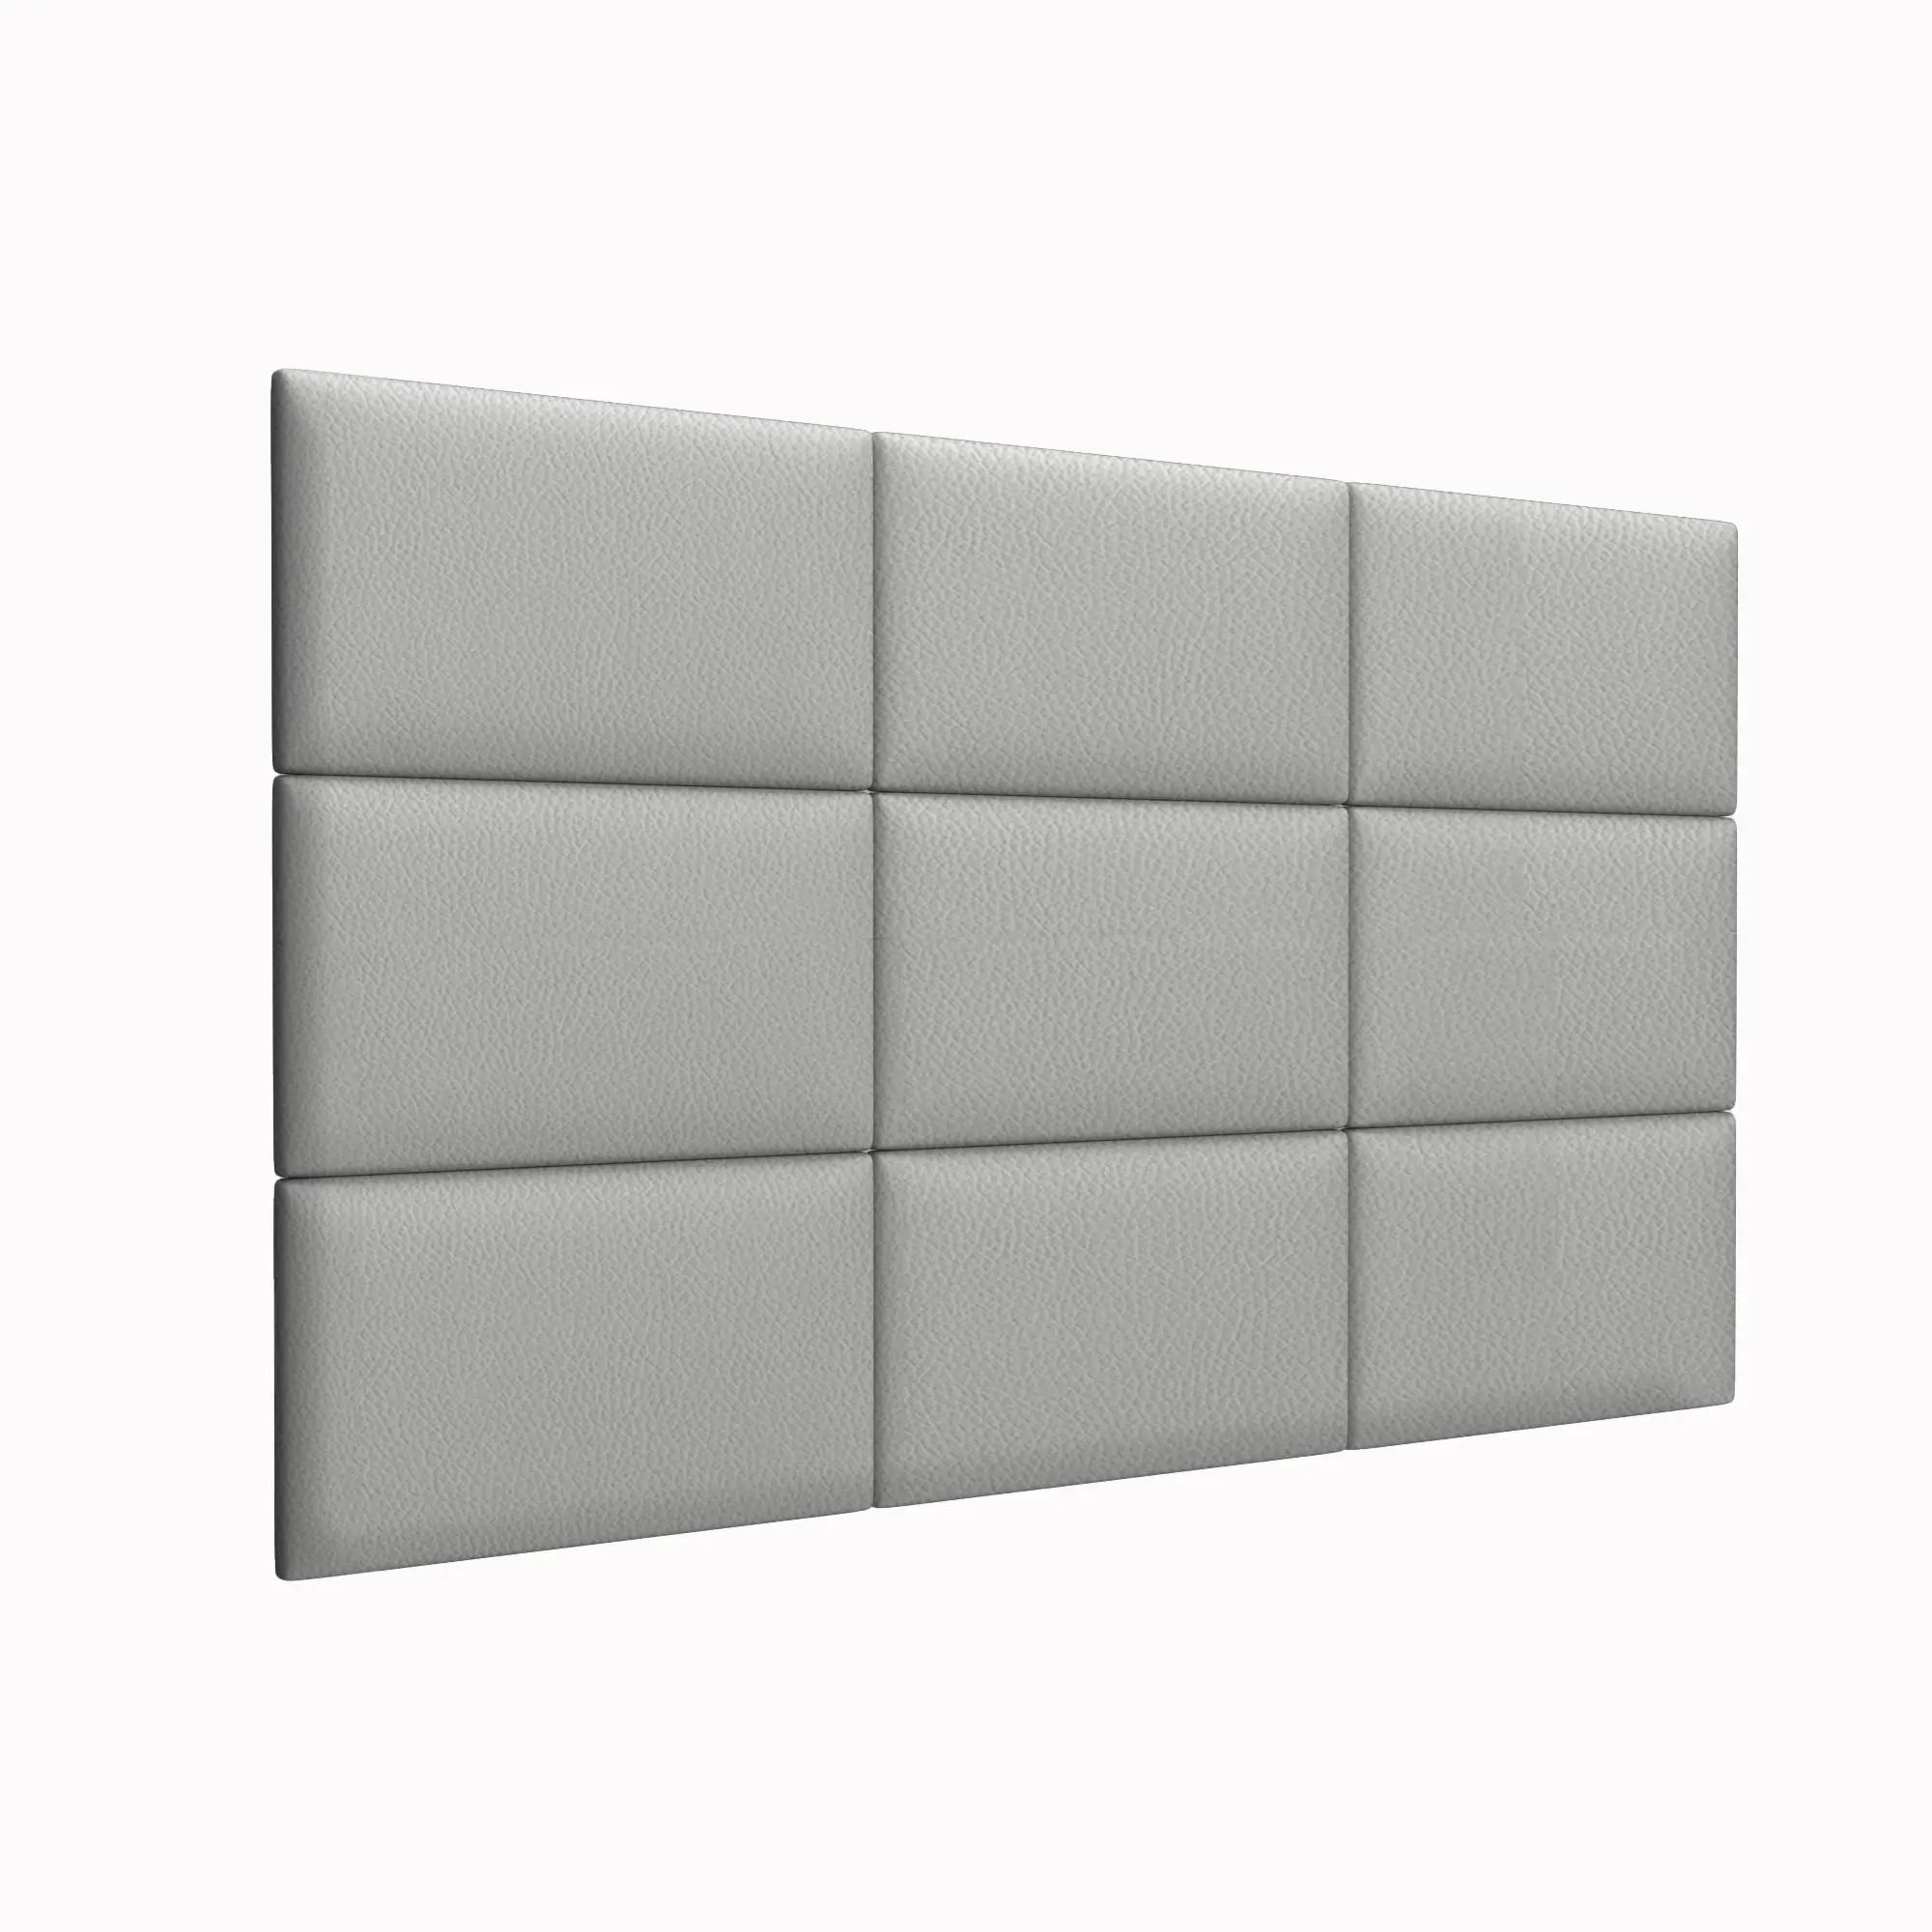 Стеновая панель Eco Leather Silver 30х50 см 4 шт.